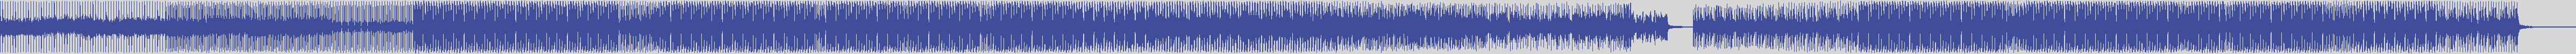 atomic_recordings [AR018] Duo - Music [Original Mix] audio wave form